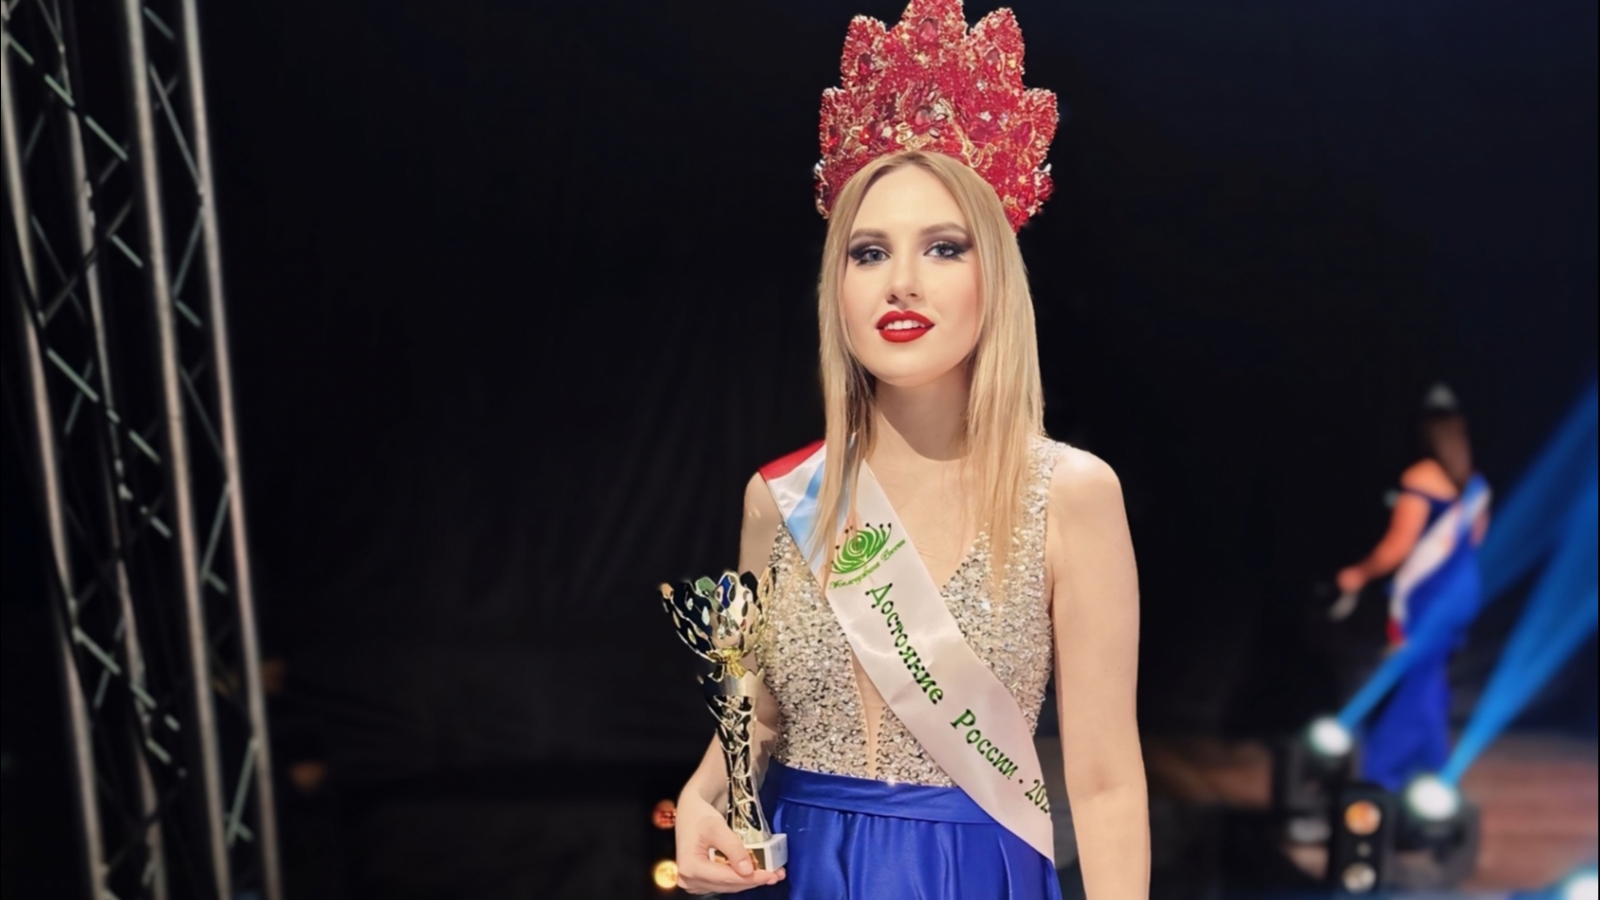 Северянка завоевала титул «Достояние России» на фестивале туризма и красоты